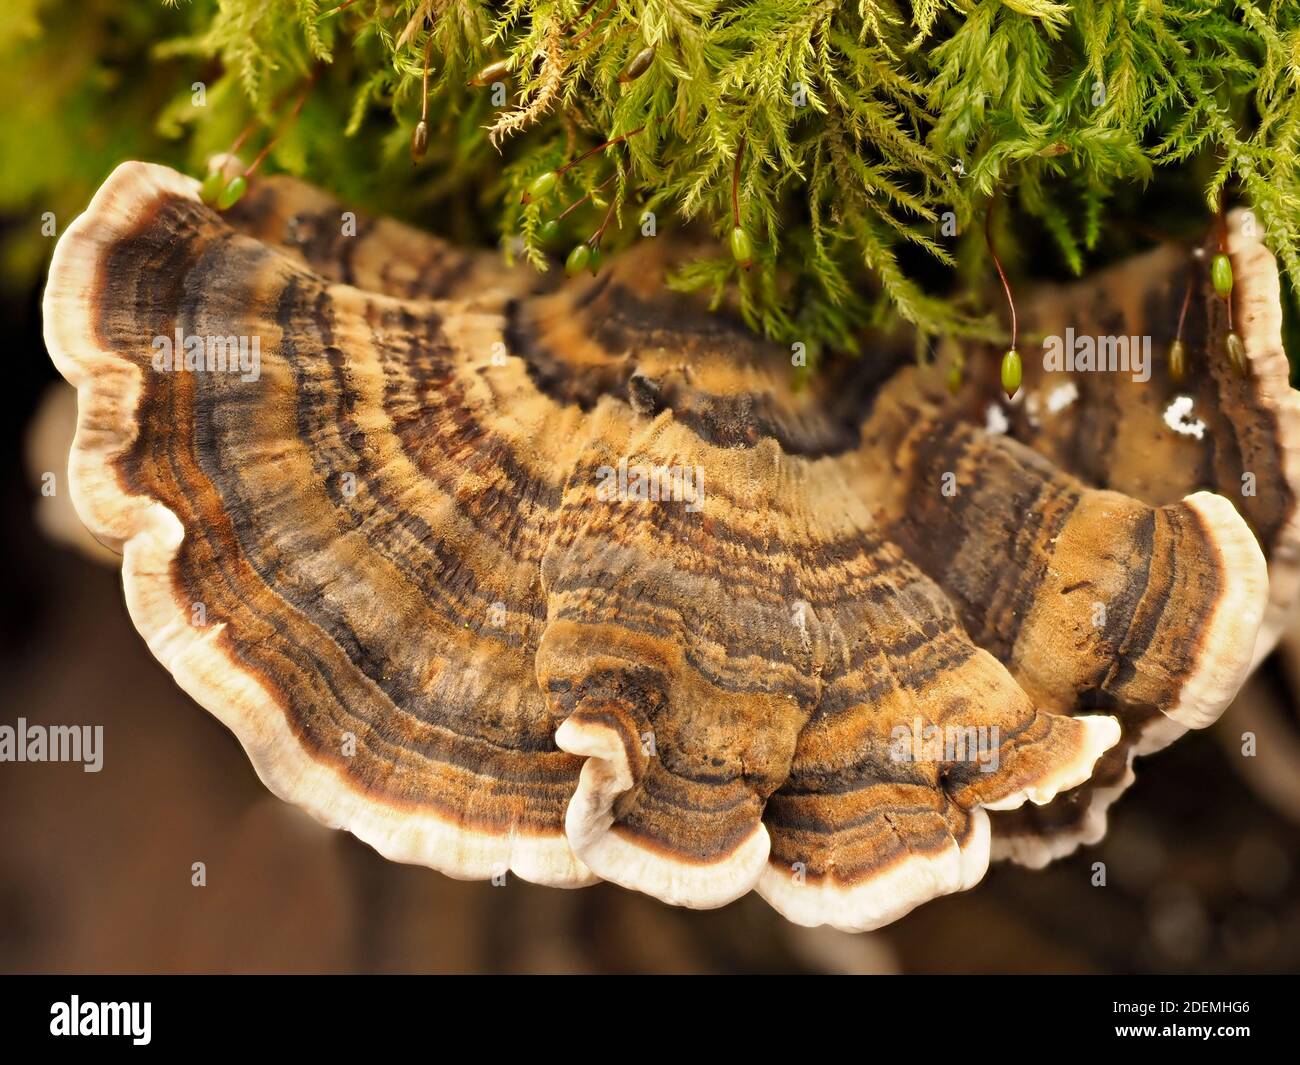 Turkey Tail Fungi (Trametes versicolor), common polypore fungus, Dering Woods, Kent UK, stacked focus image Stock Photo